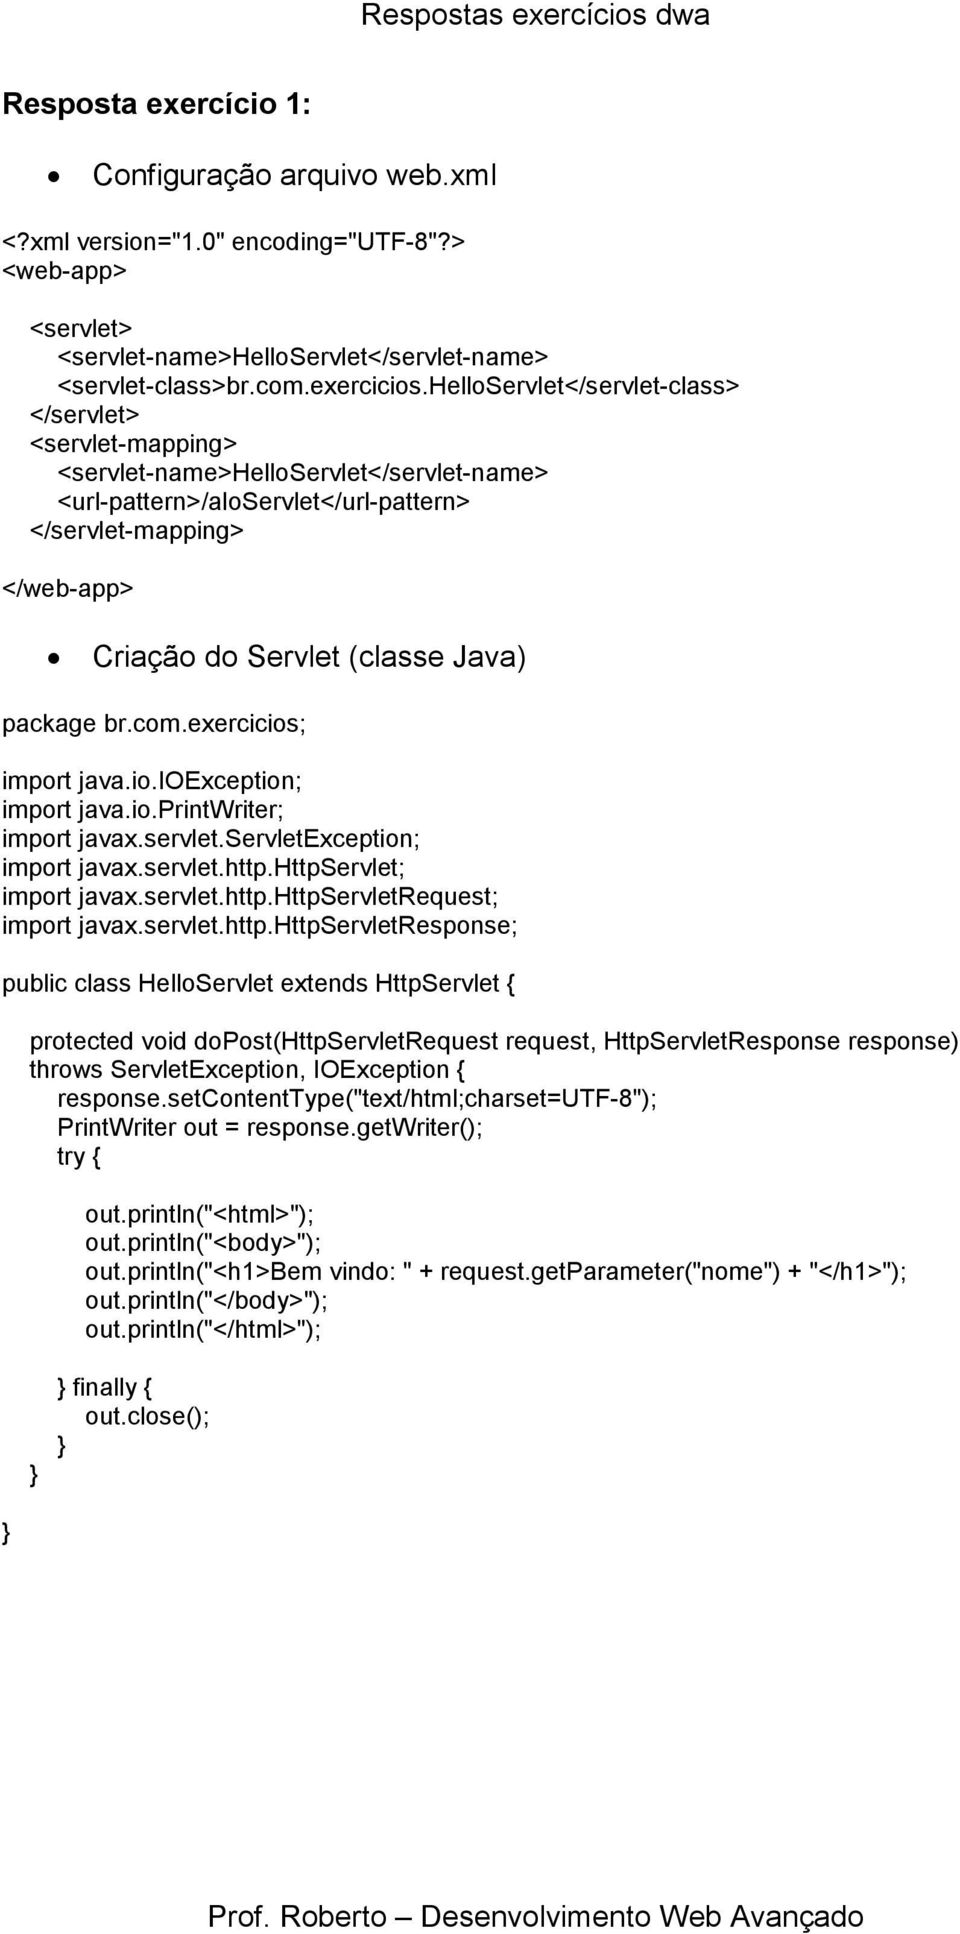 Java) package br.com.exercicios; import java.io.ioexception; import java.io.printwriter; import javax.servlet.servletexception; import javax.servlet.http.httpservlet; import javax.servlet.http.httpservletrequest; import javax.